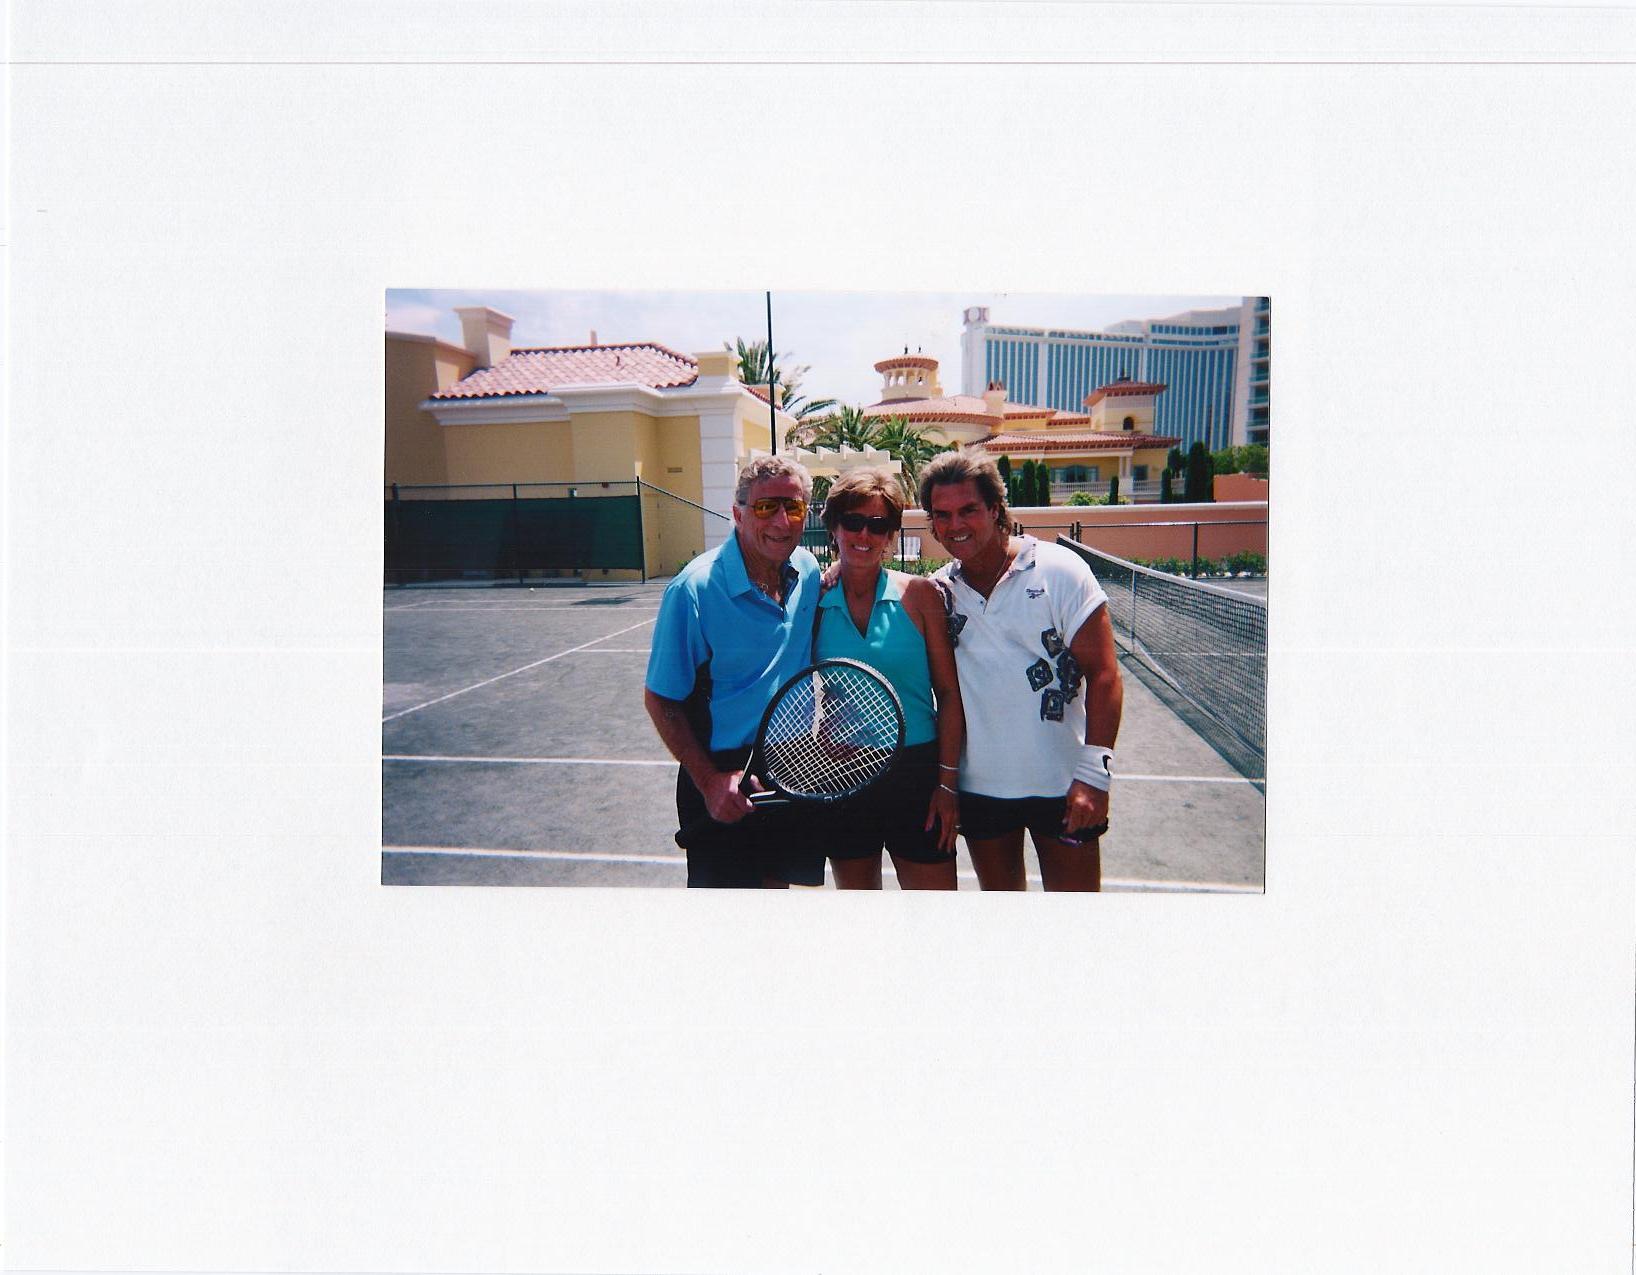 Doubles Tennis Partner, Tony Bennett & company at Turnsberry Aisle in Las Vegas, NV